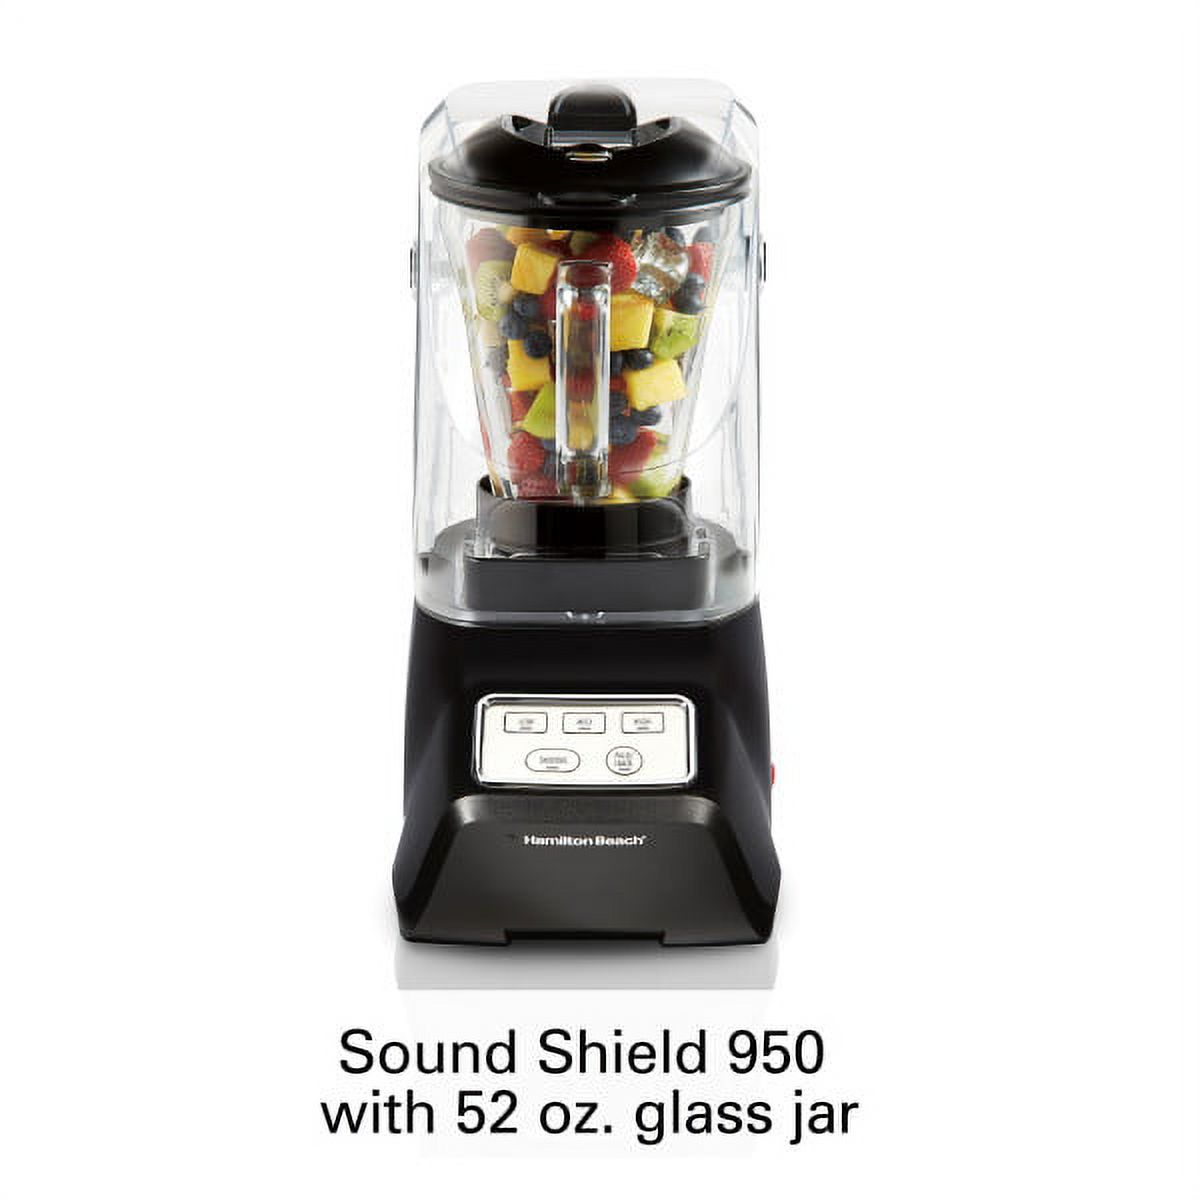 Hamilton Beach Sound Shield 950 Watt 52 oz Countertop Food Blender Mixer, Black - image 2 of 6